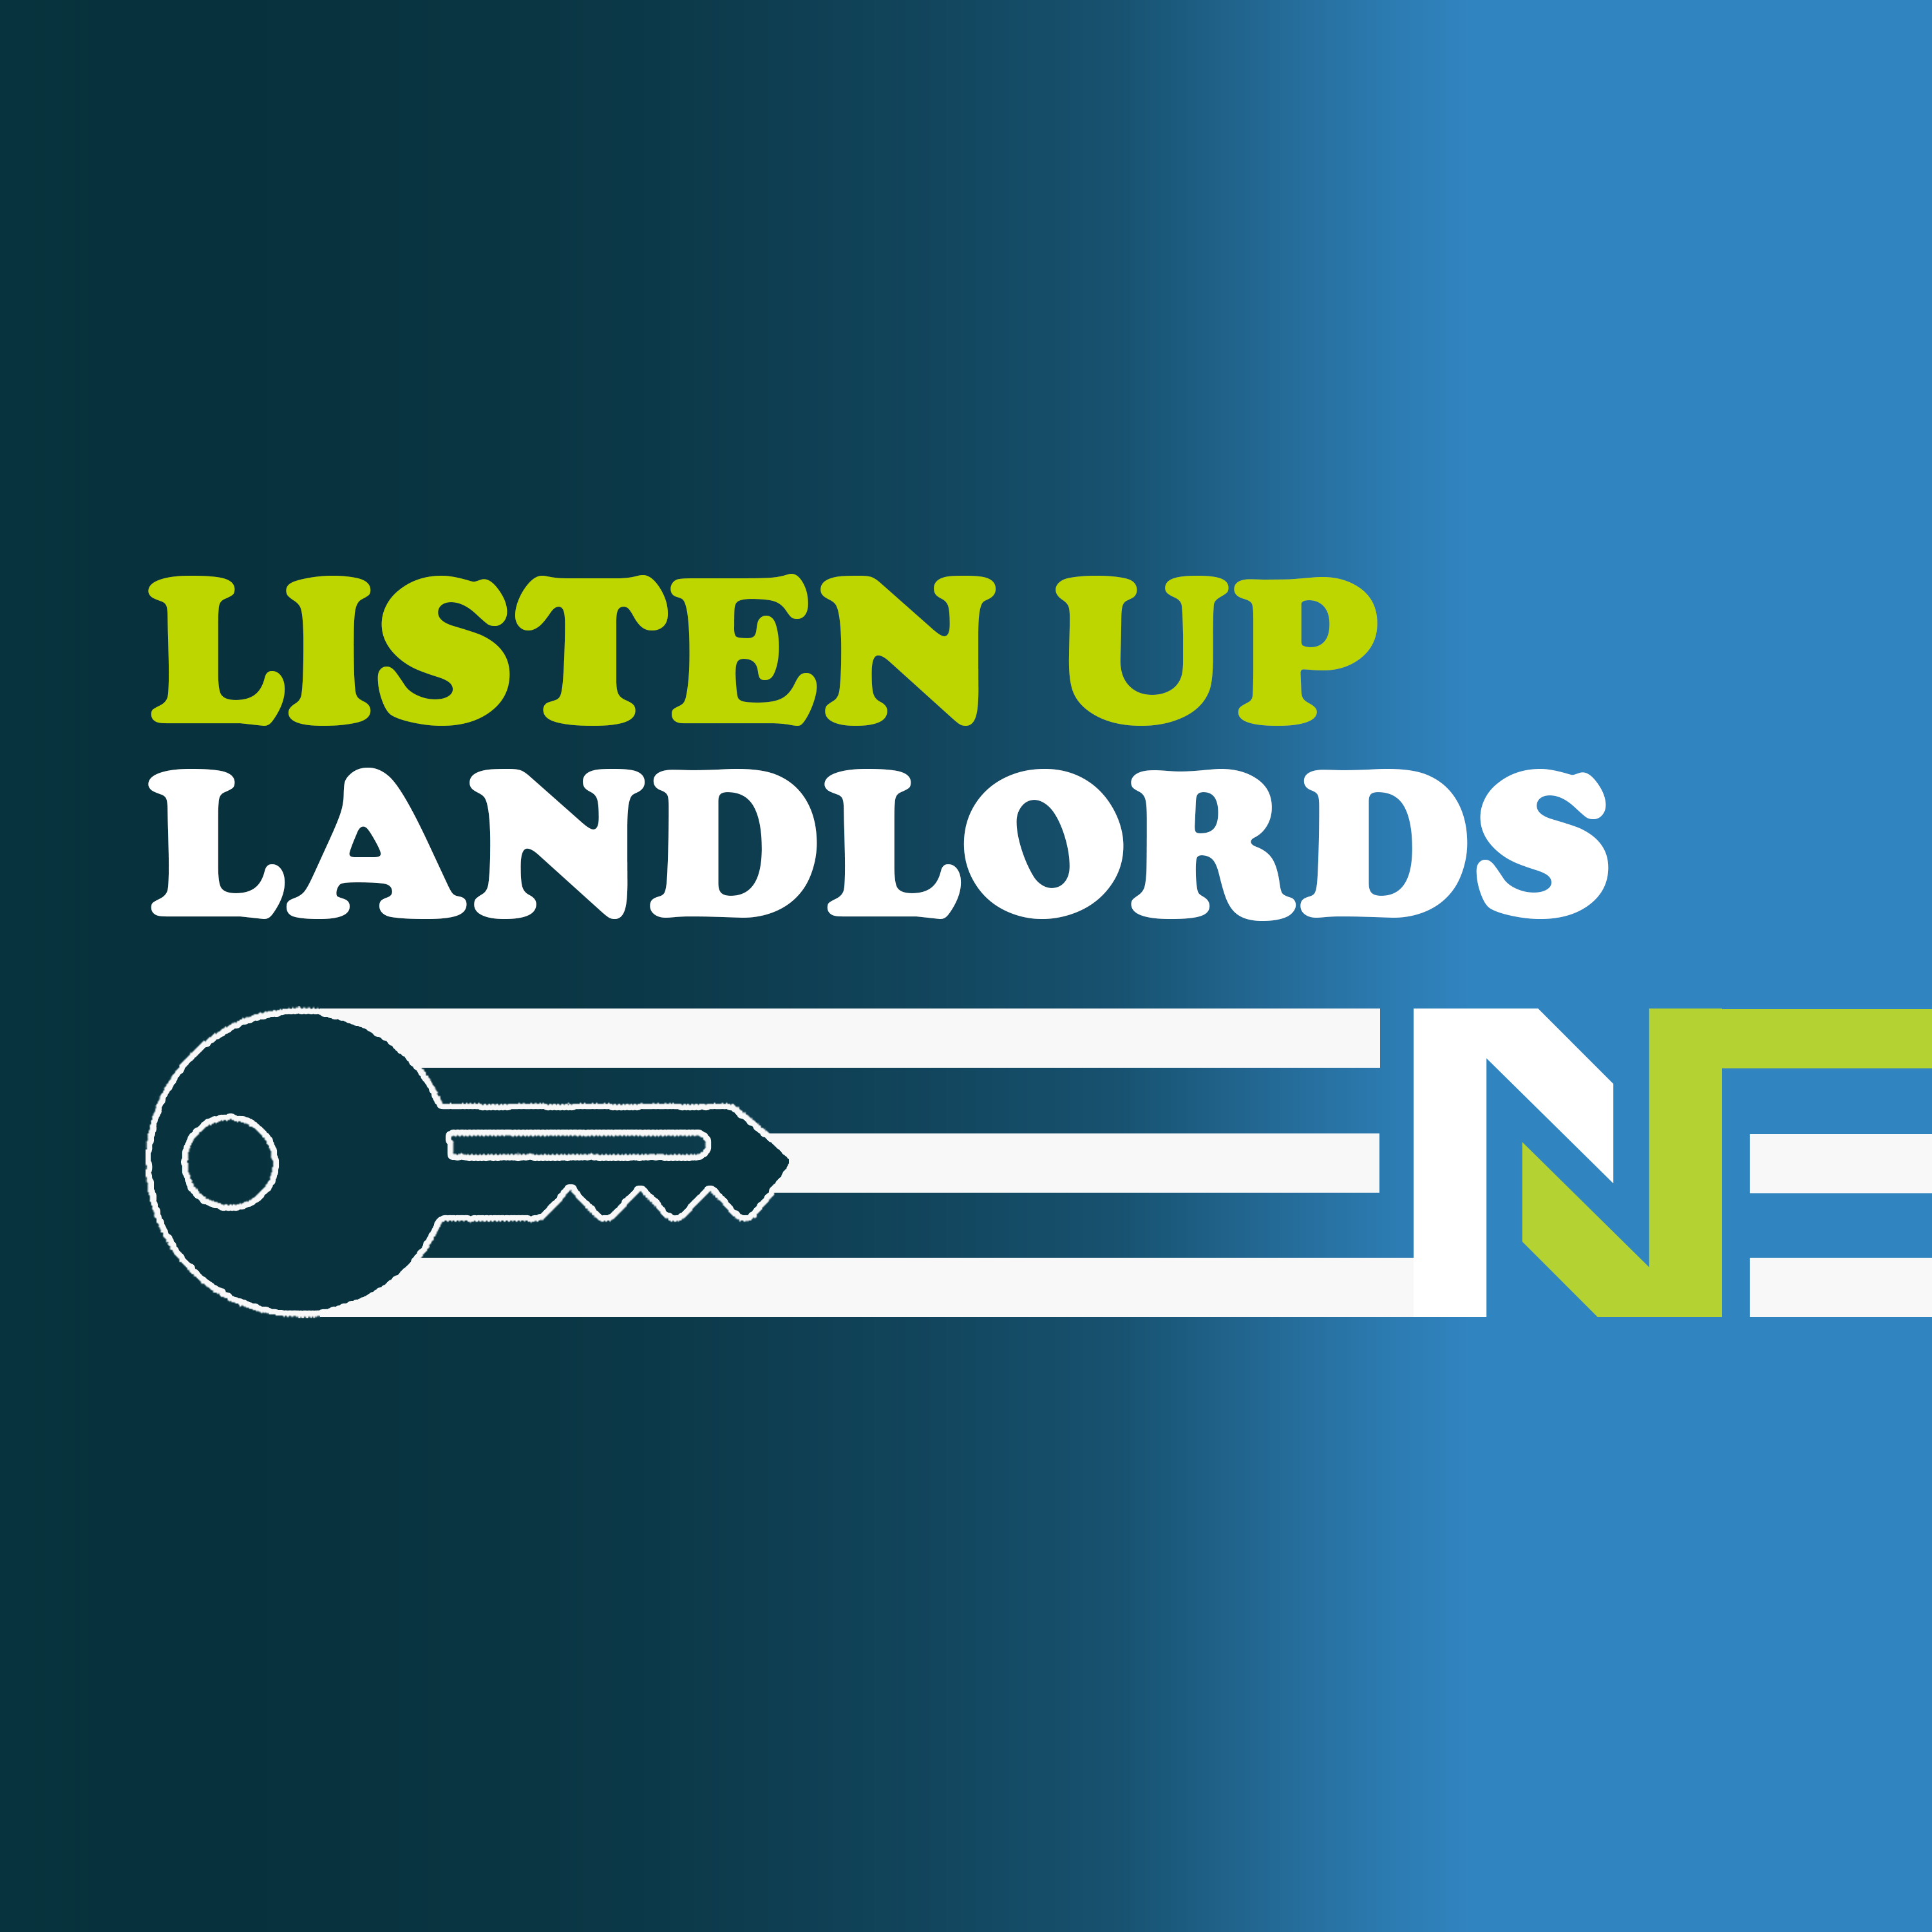 Listen Up Landlords!!!